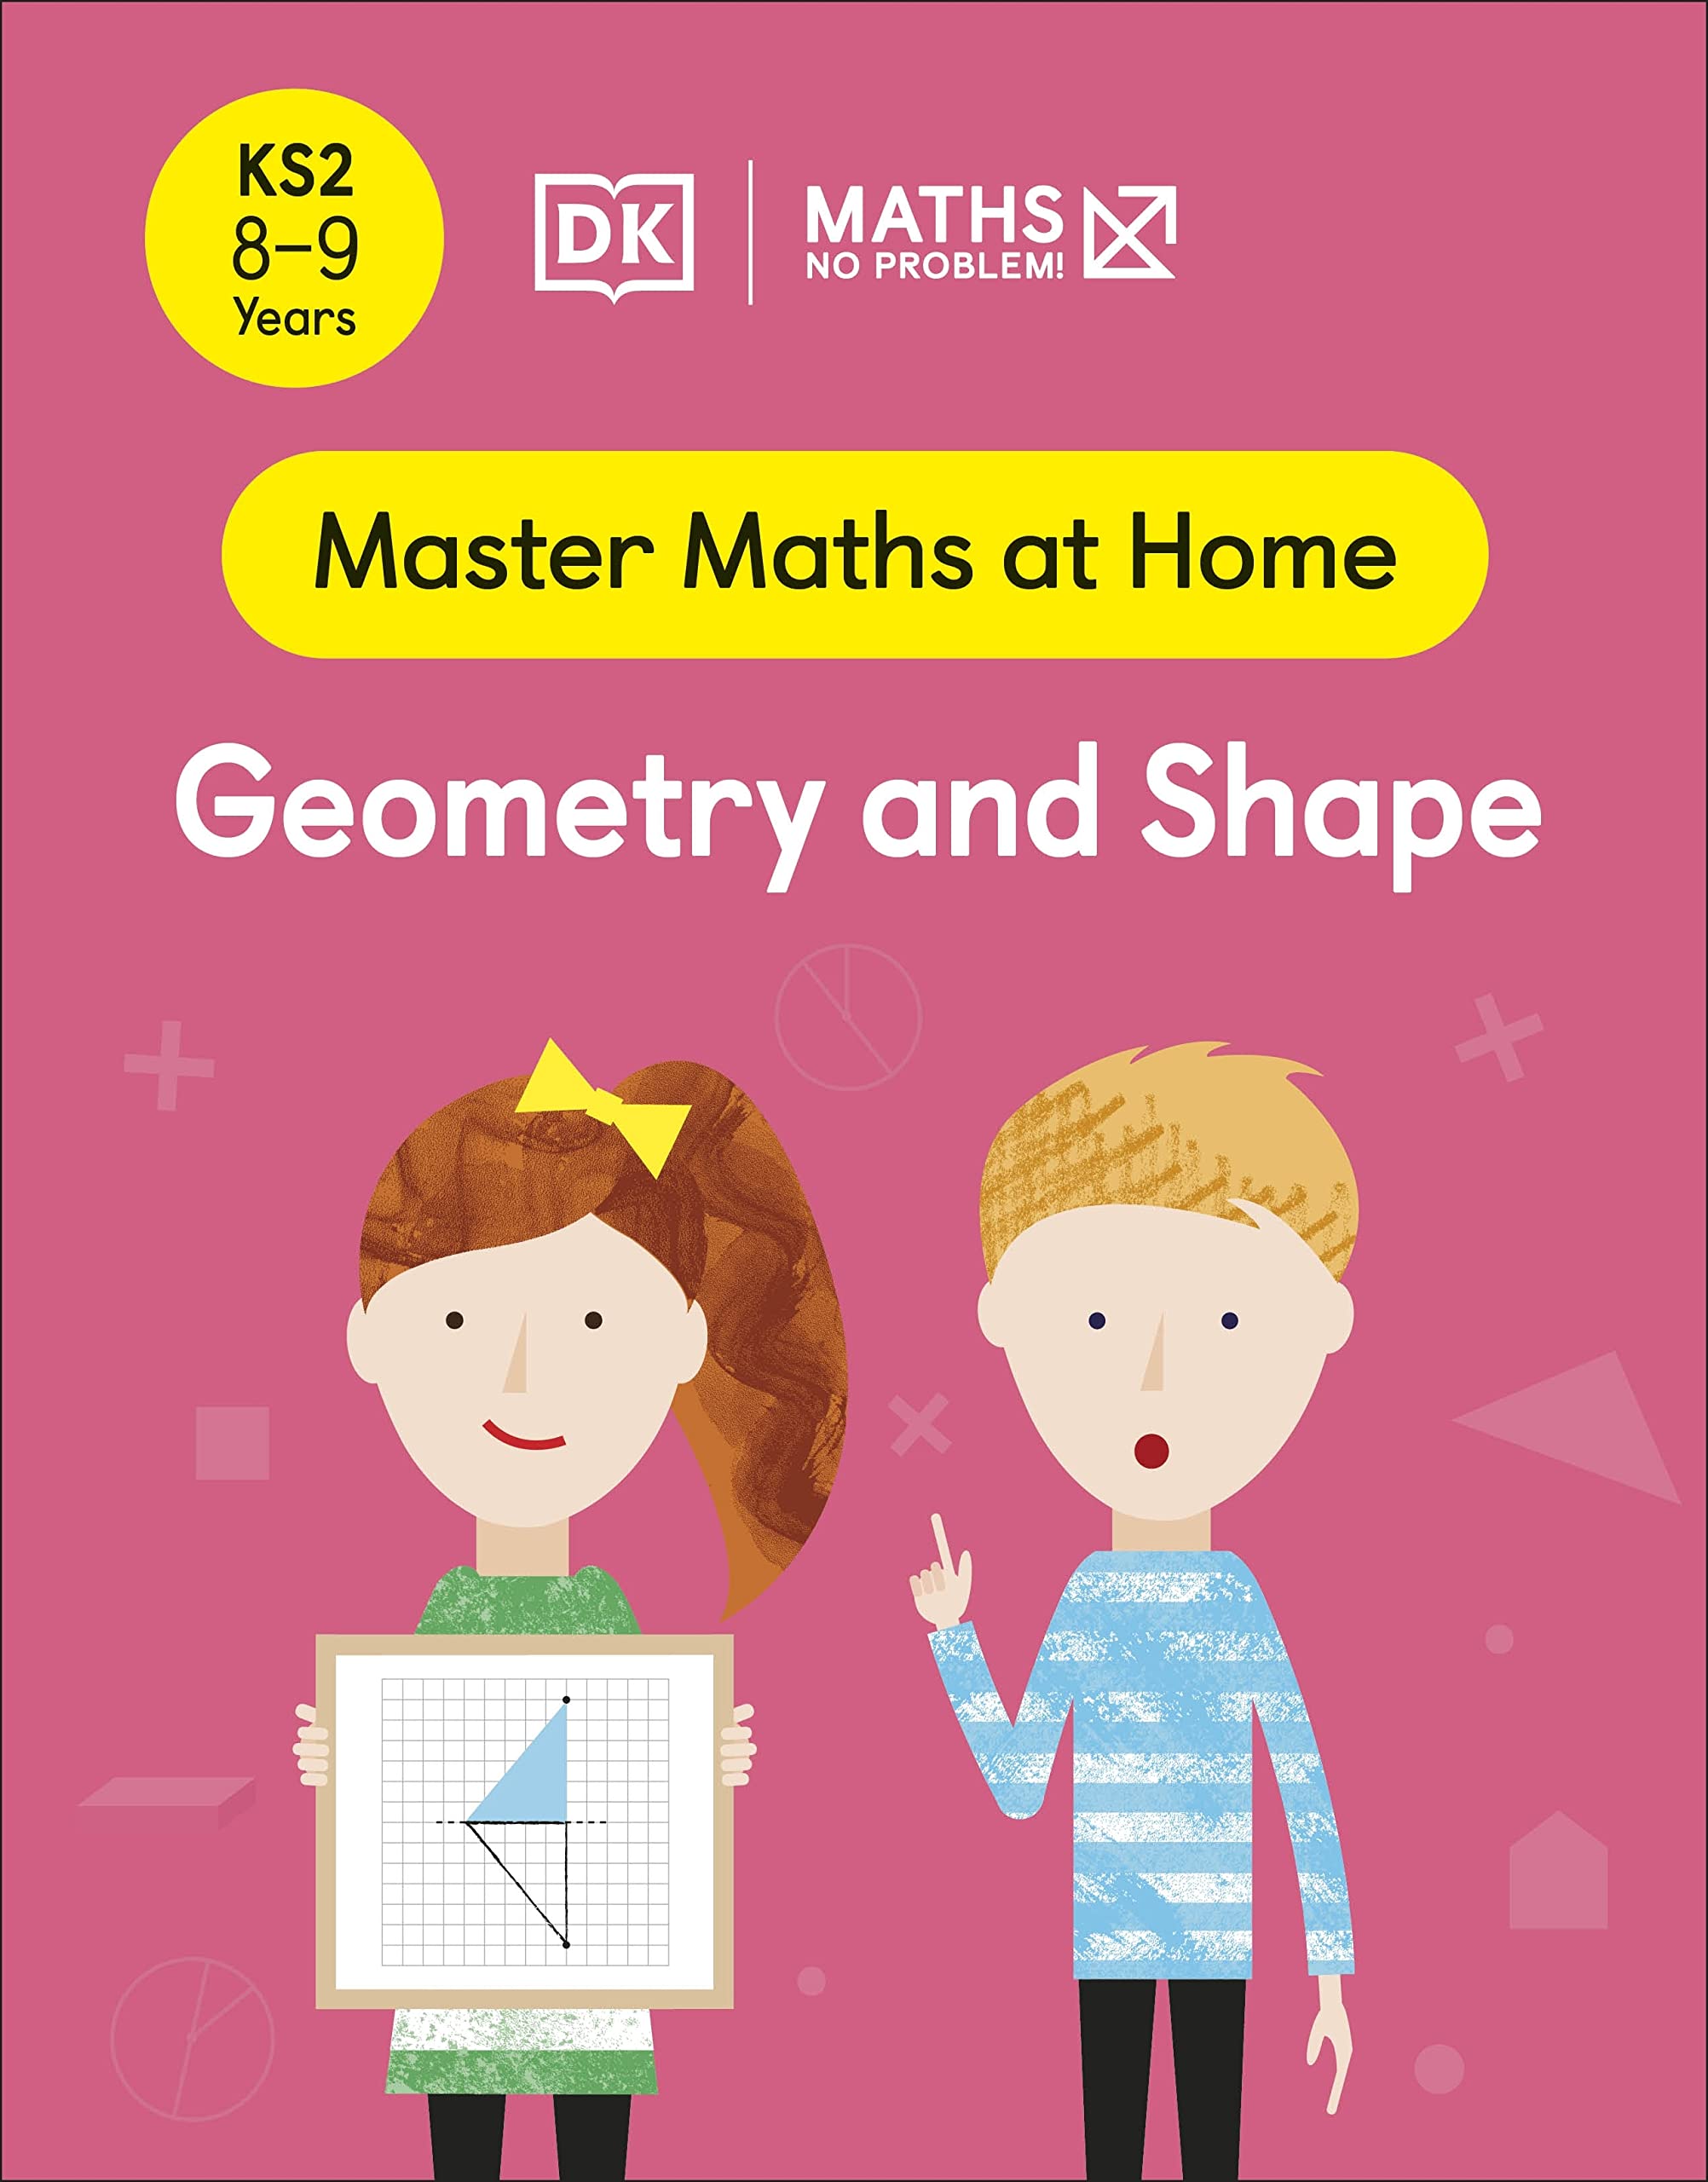 Maths - No Problem! Geometry and Shape